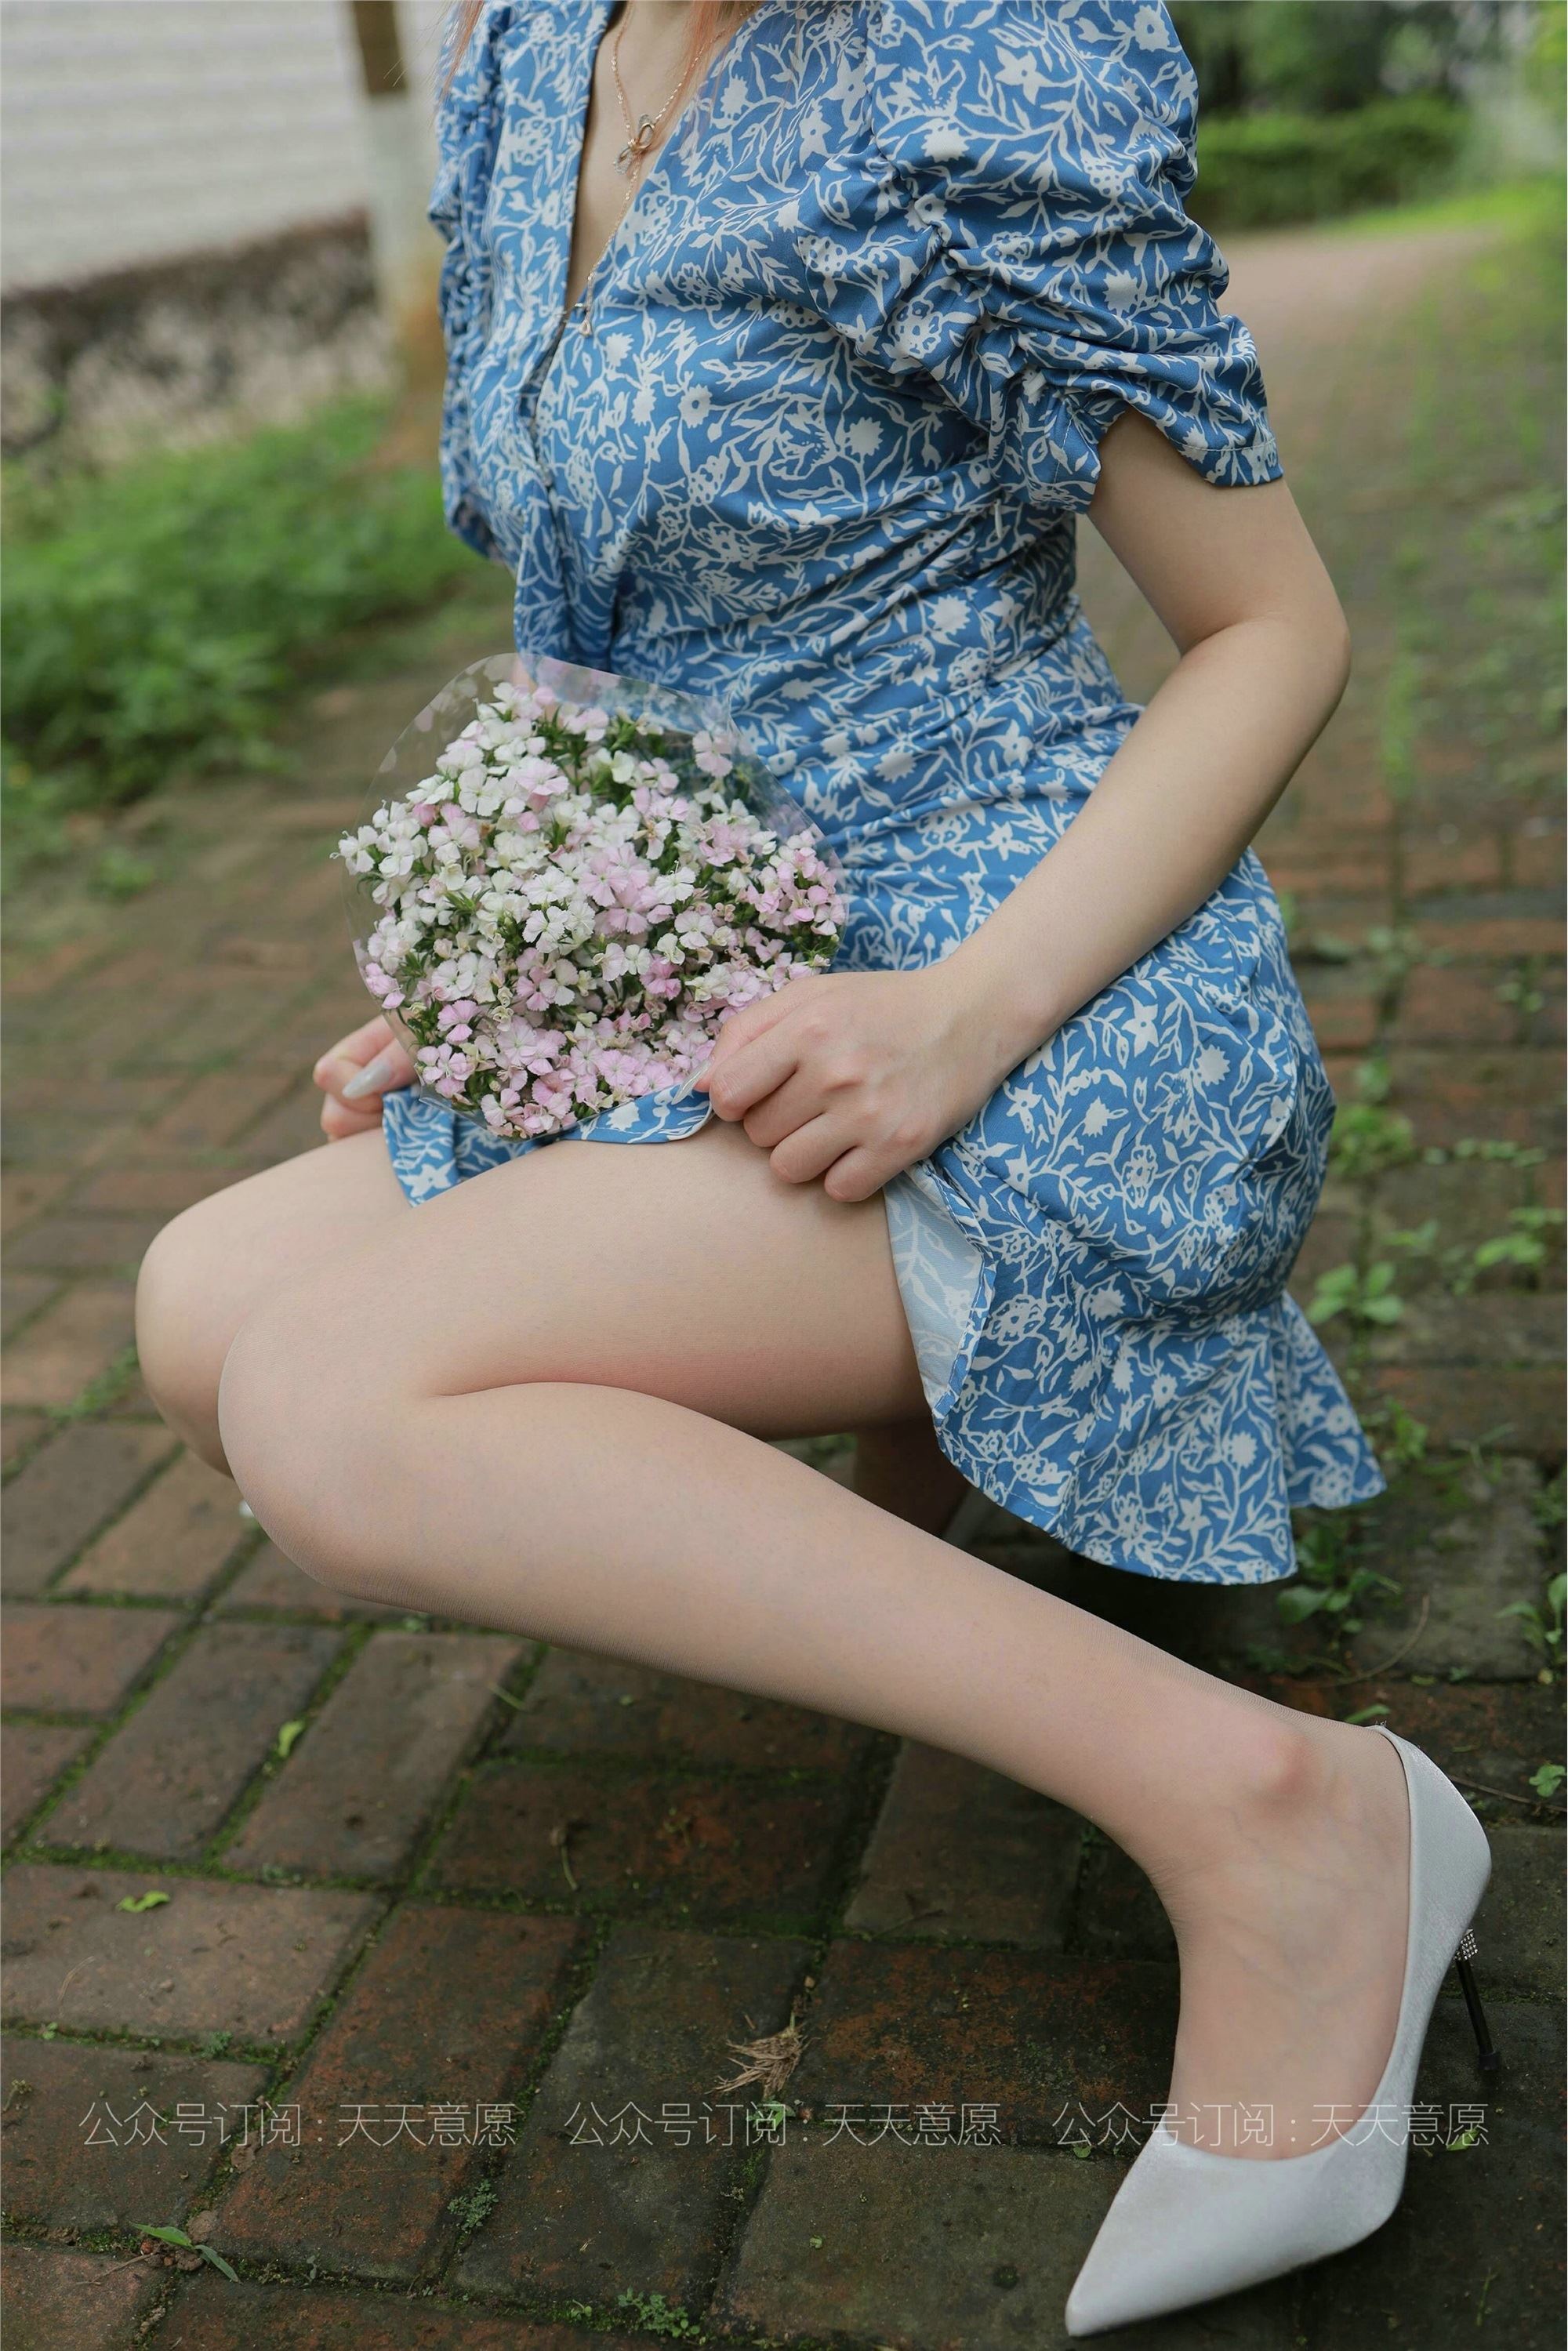 IESS: The Little Flower Girl by Crape Myrtle